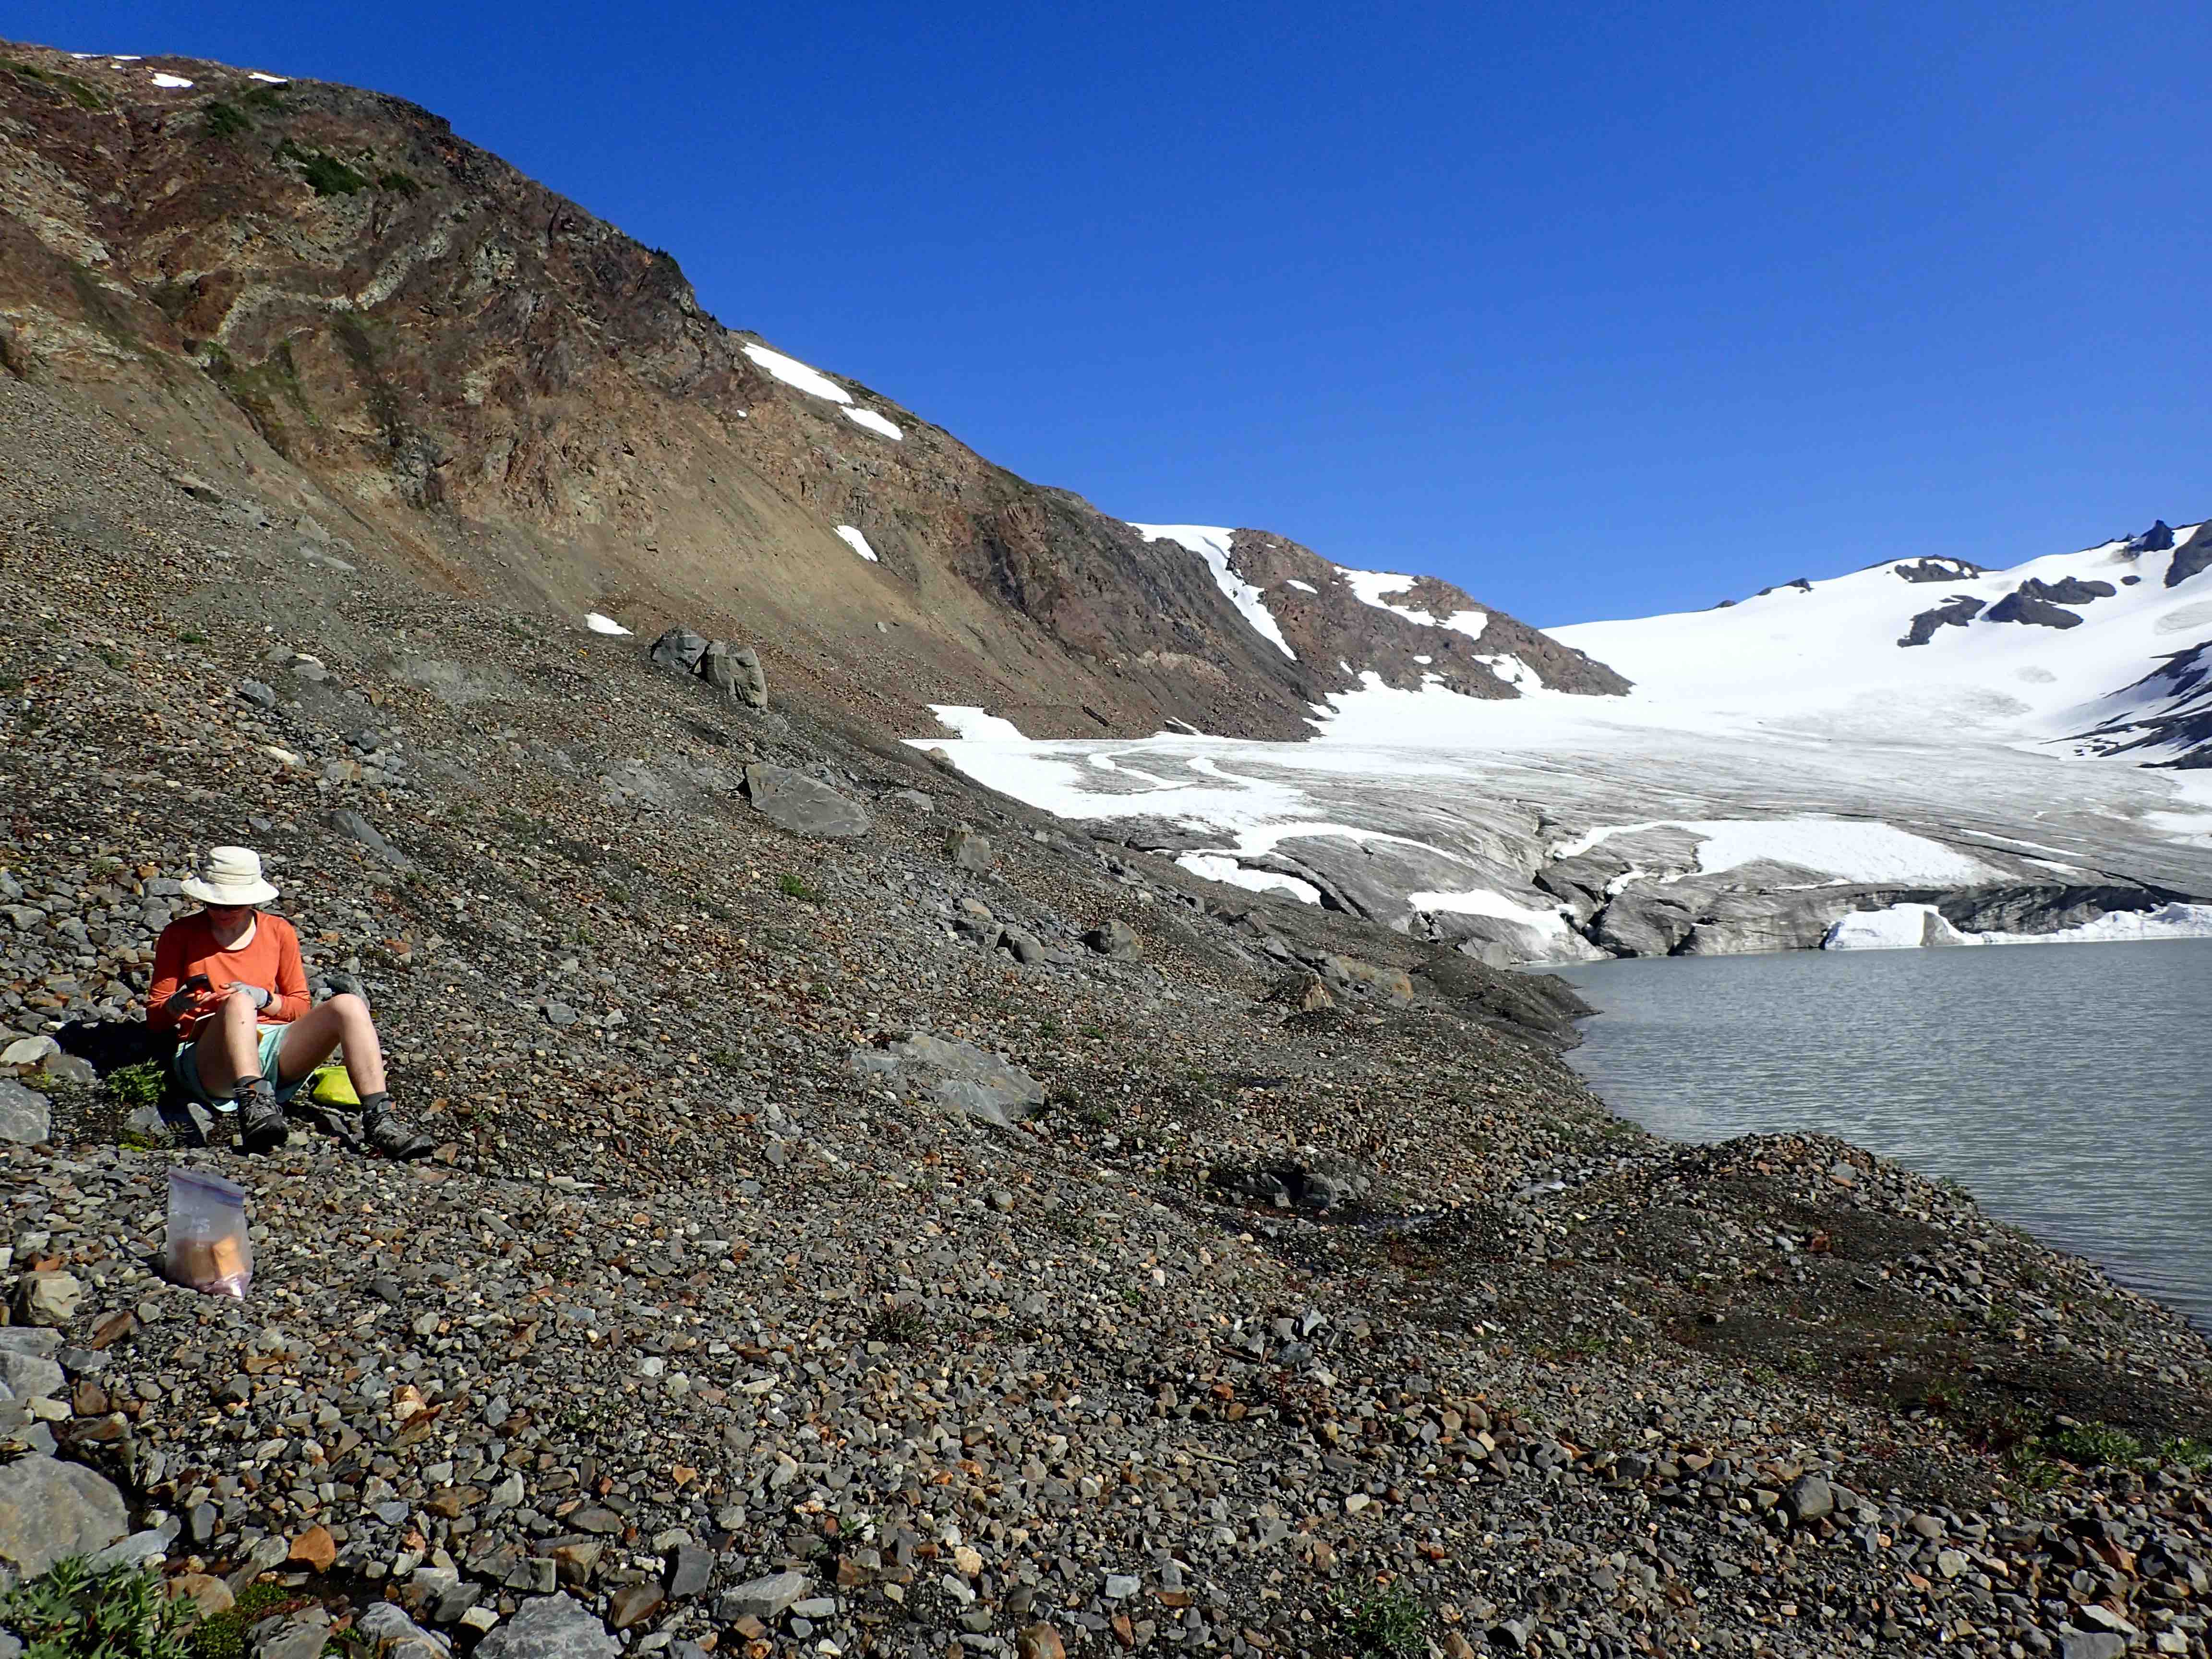 sampling plant tissue at the glacier edge